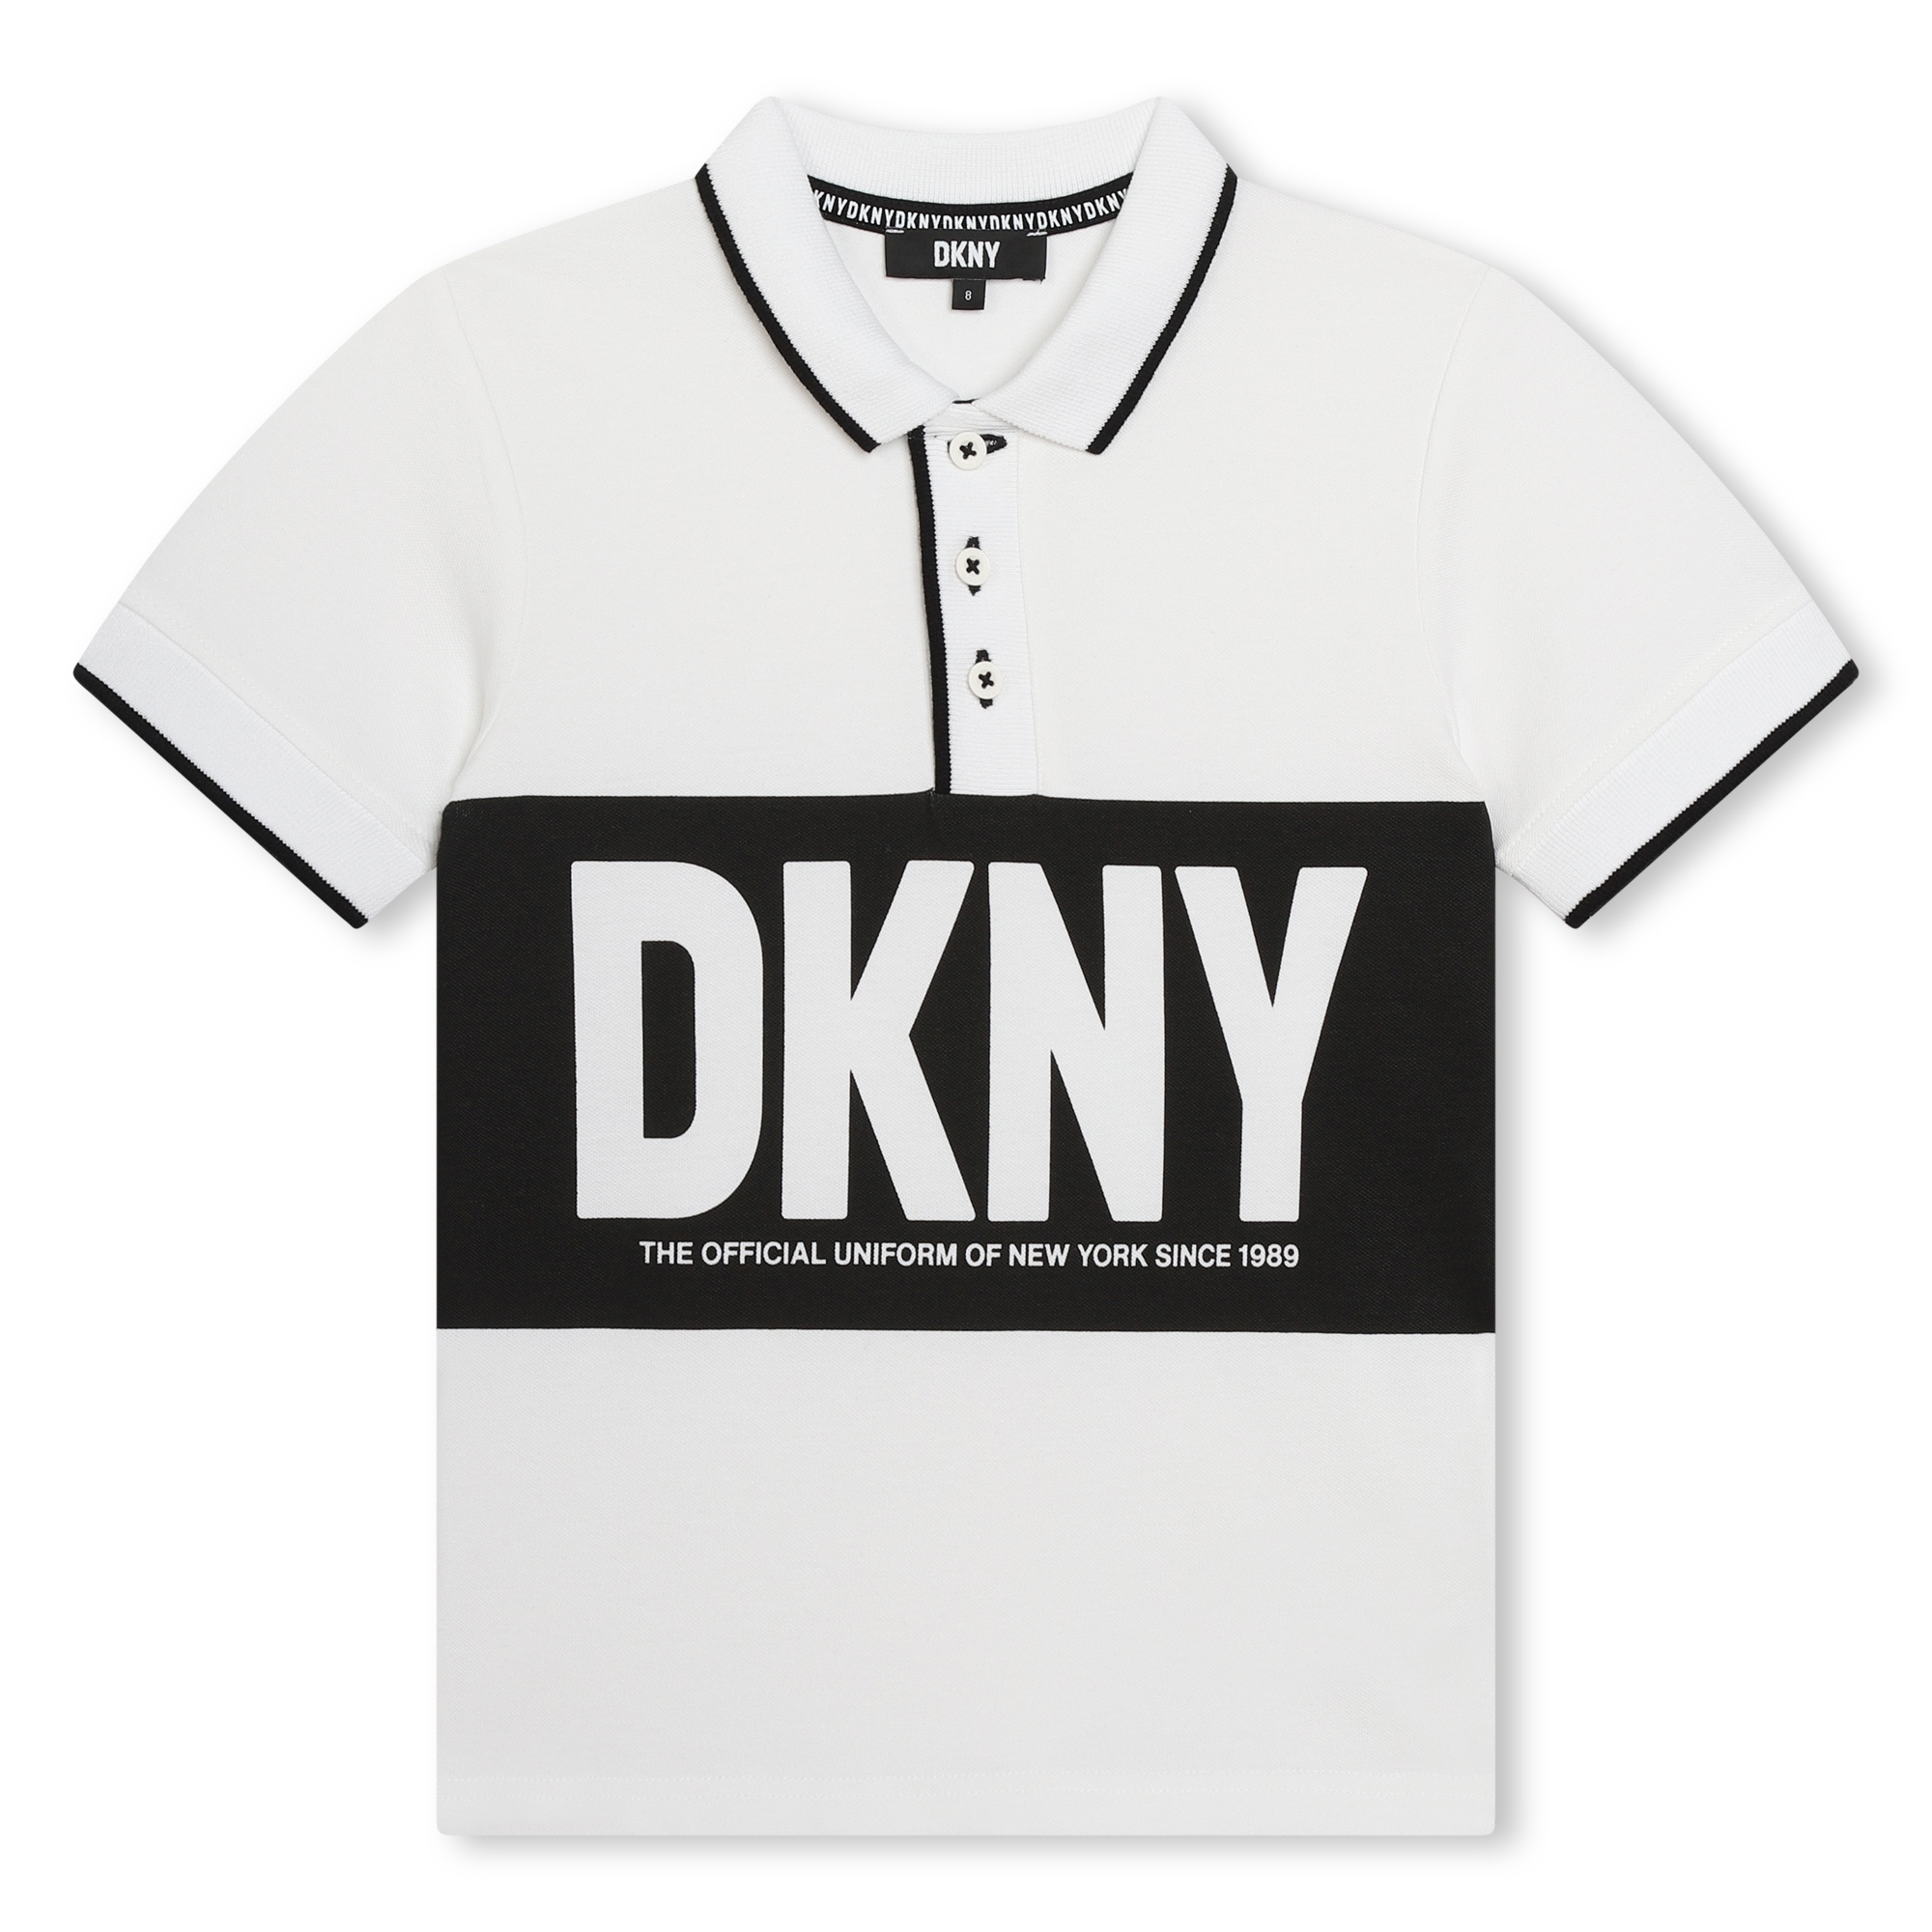 Kurzärmliges Poloshirt DKNY Für JUNGE